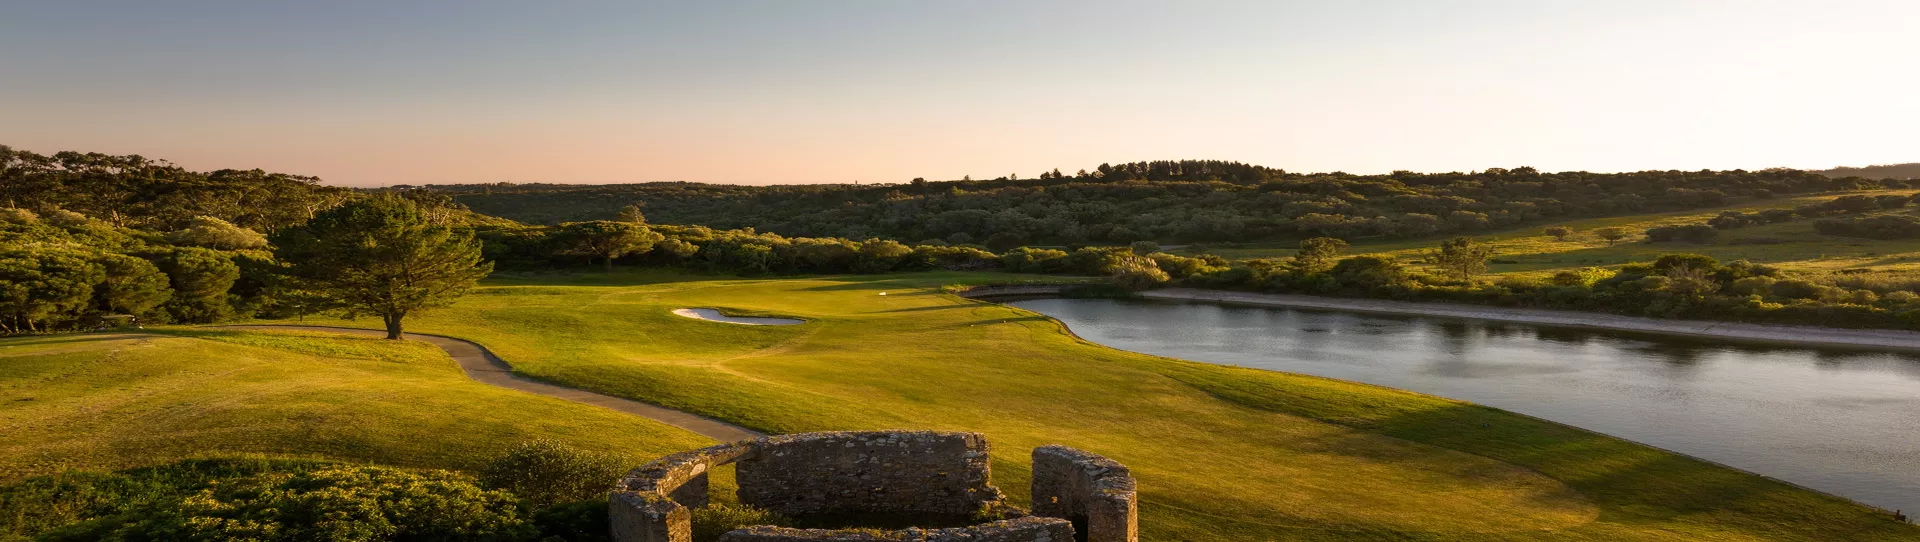 Portugal golf courses - Penha Longa Atlantic Championship - Photo 1